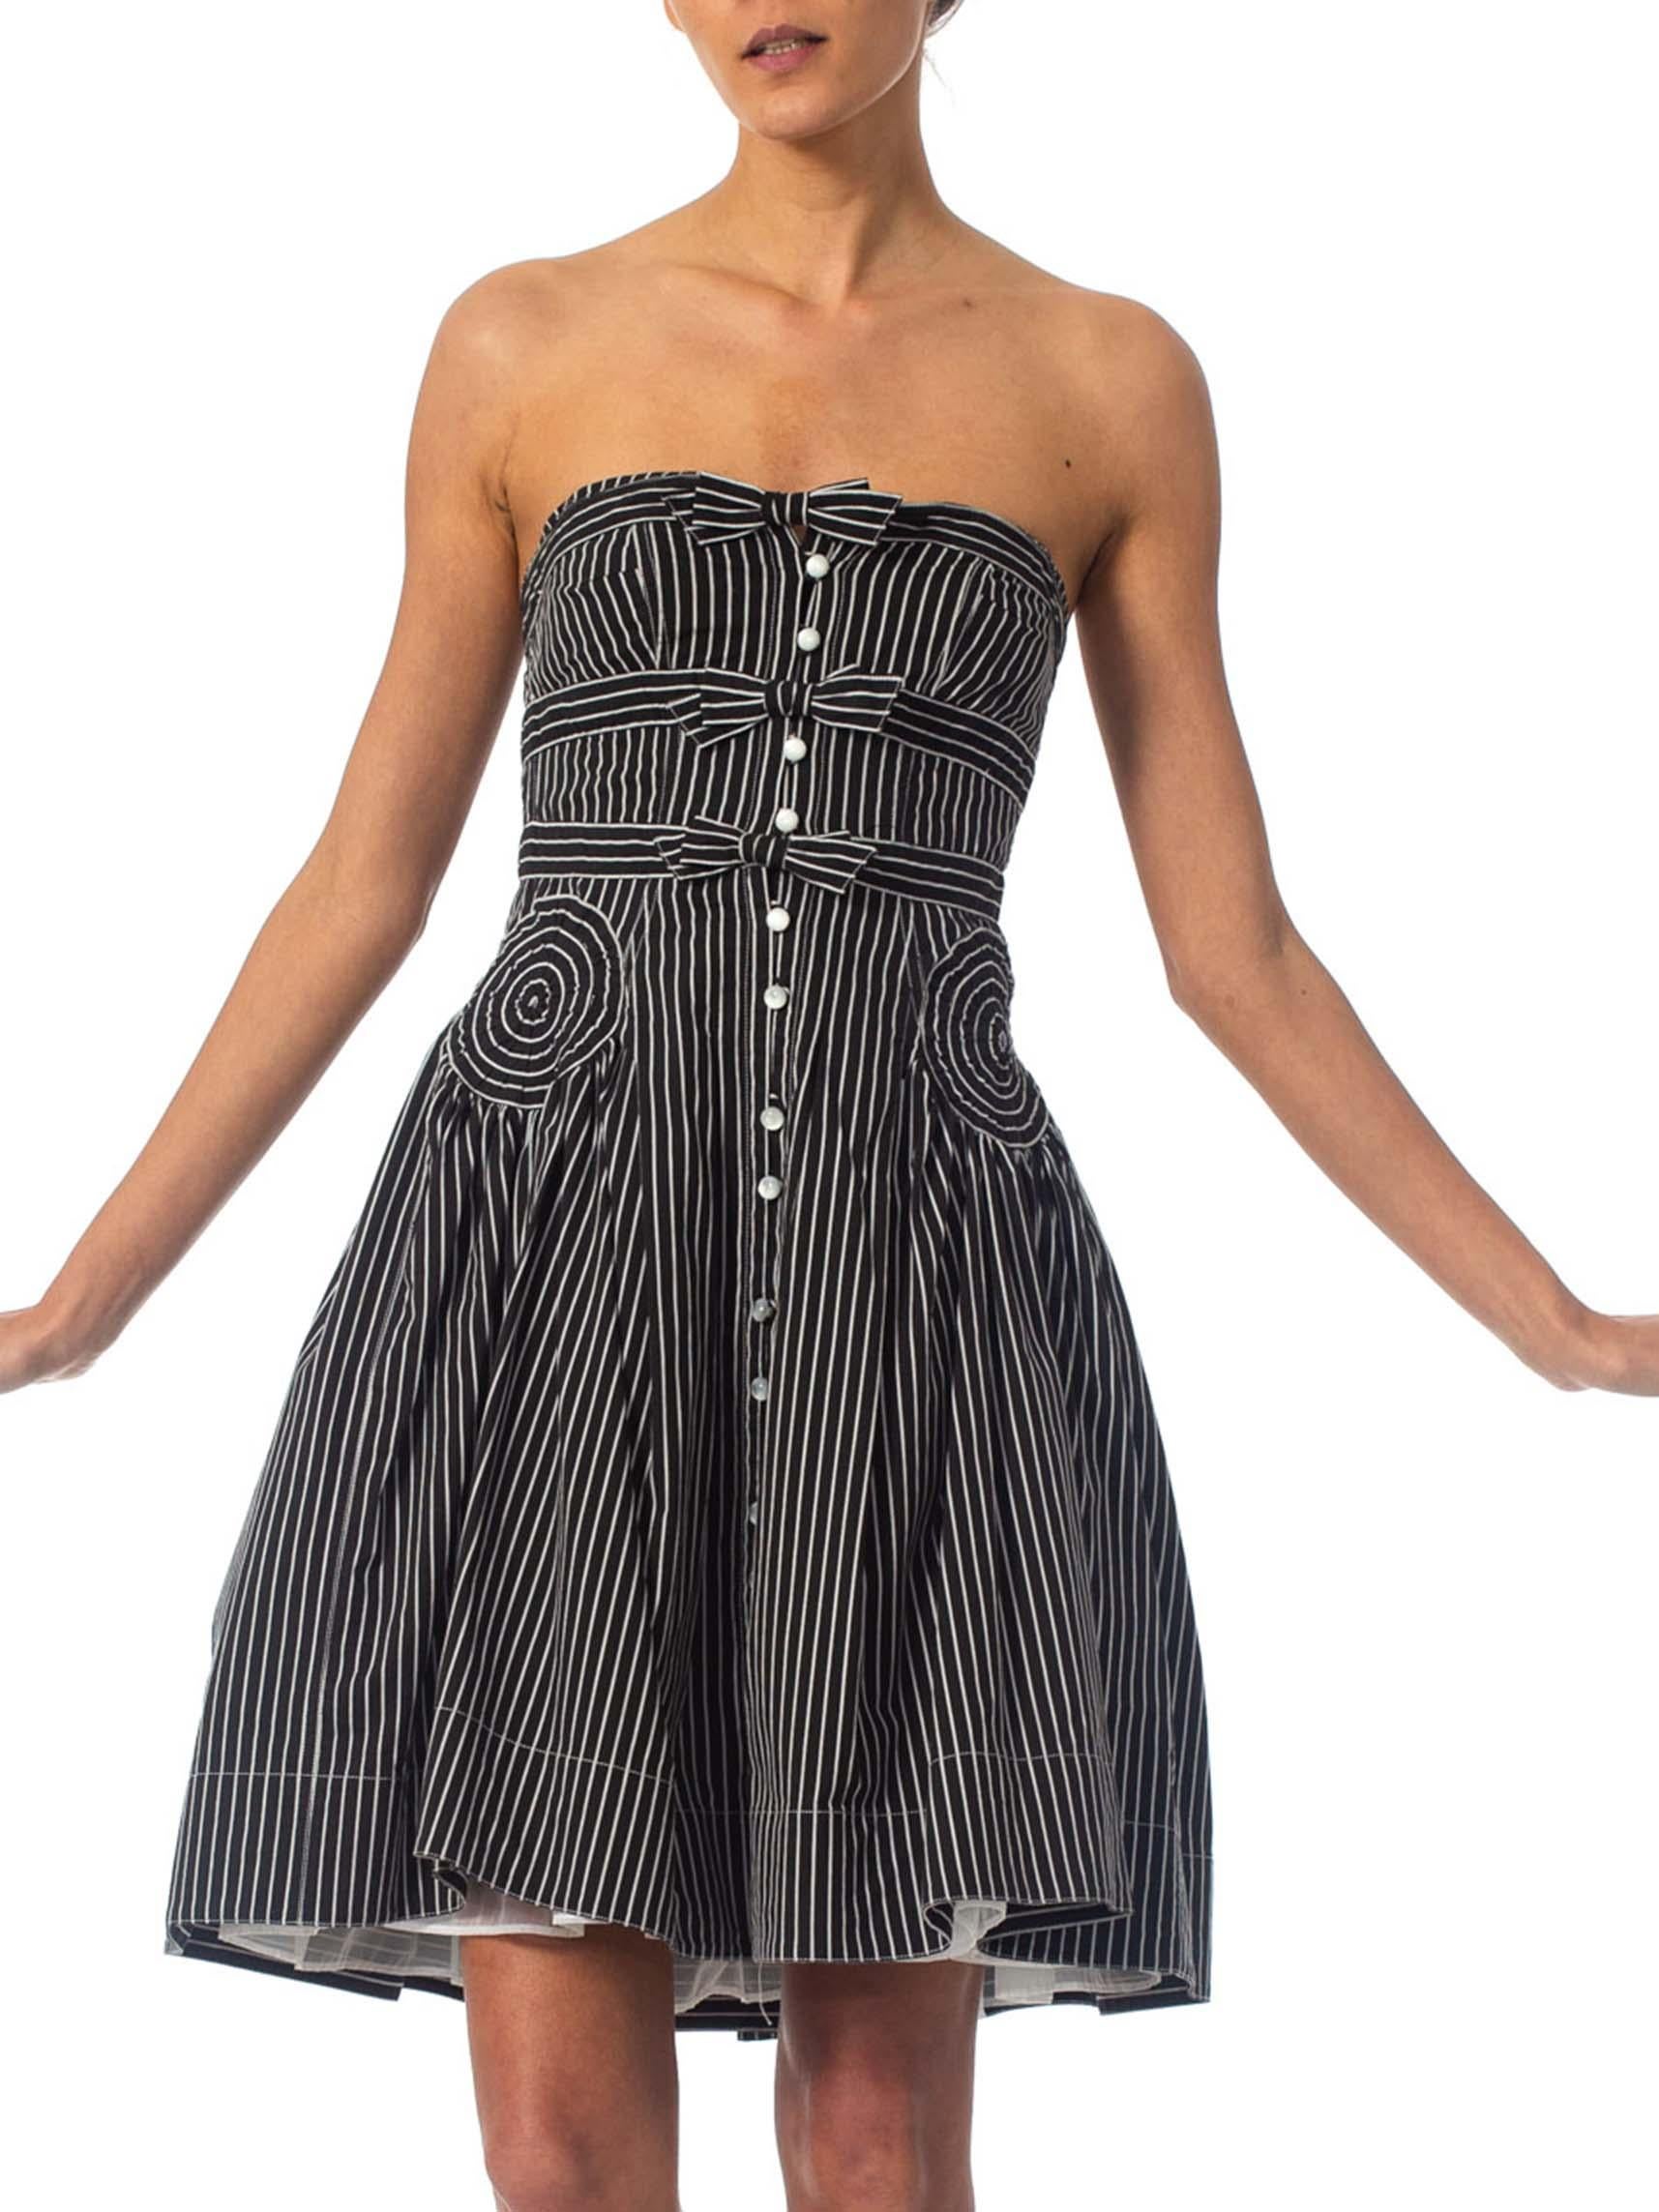 Women's 1990S BYRON LARS Black & White Striped Cotton Blend Strapless 1950S Style Dress